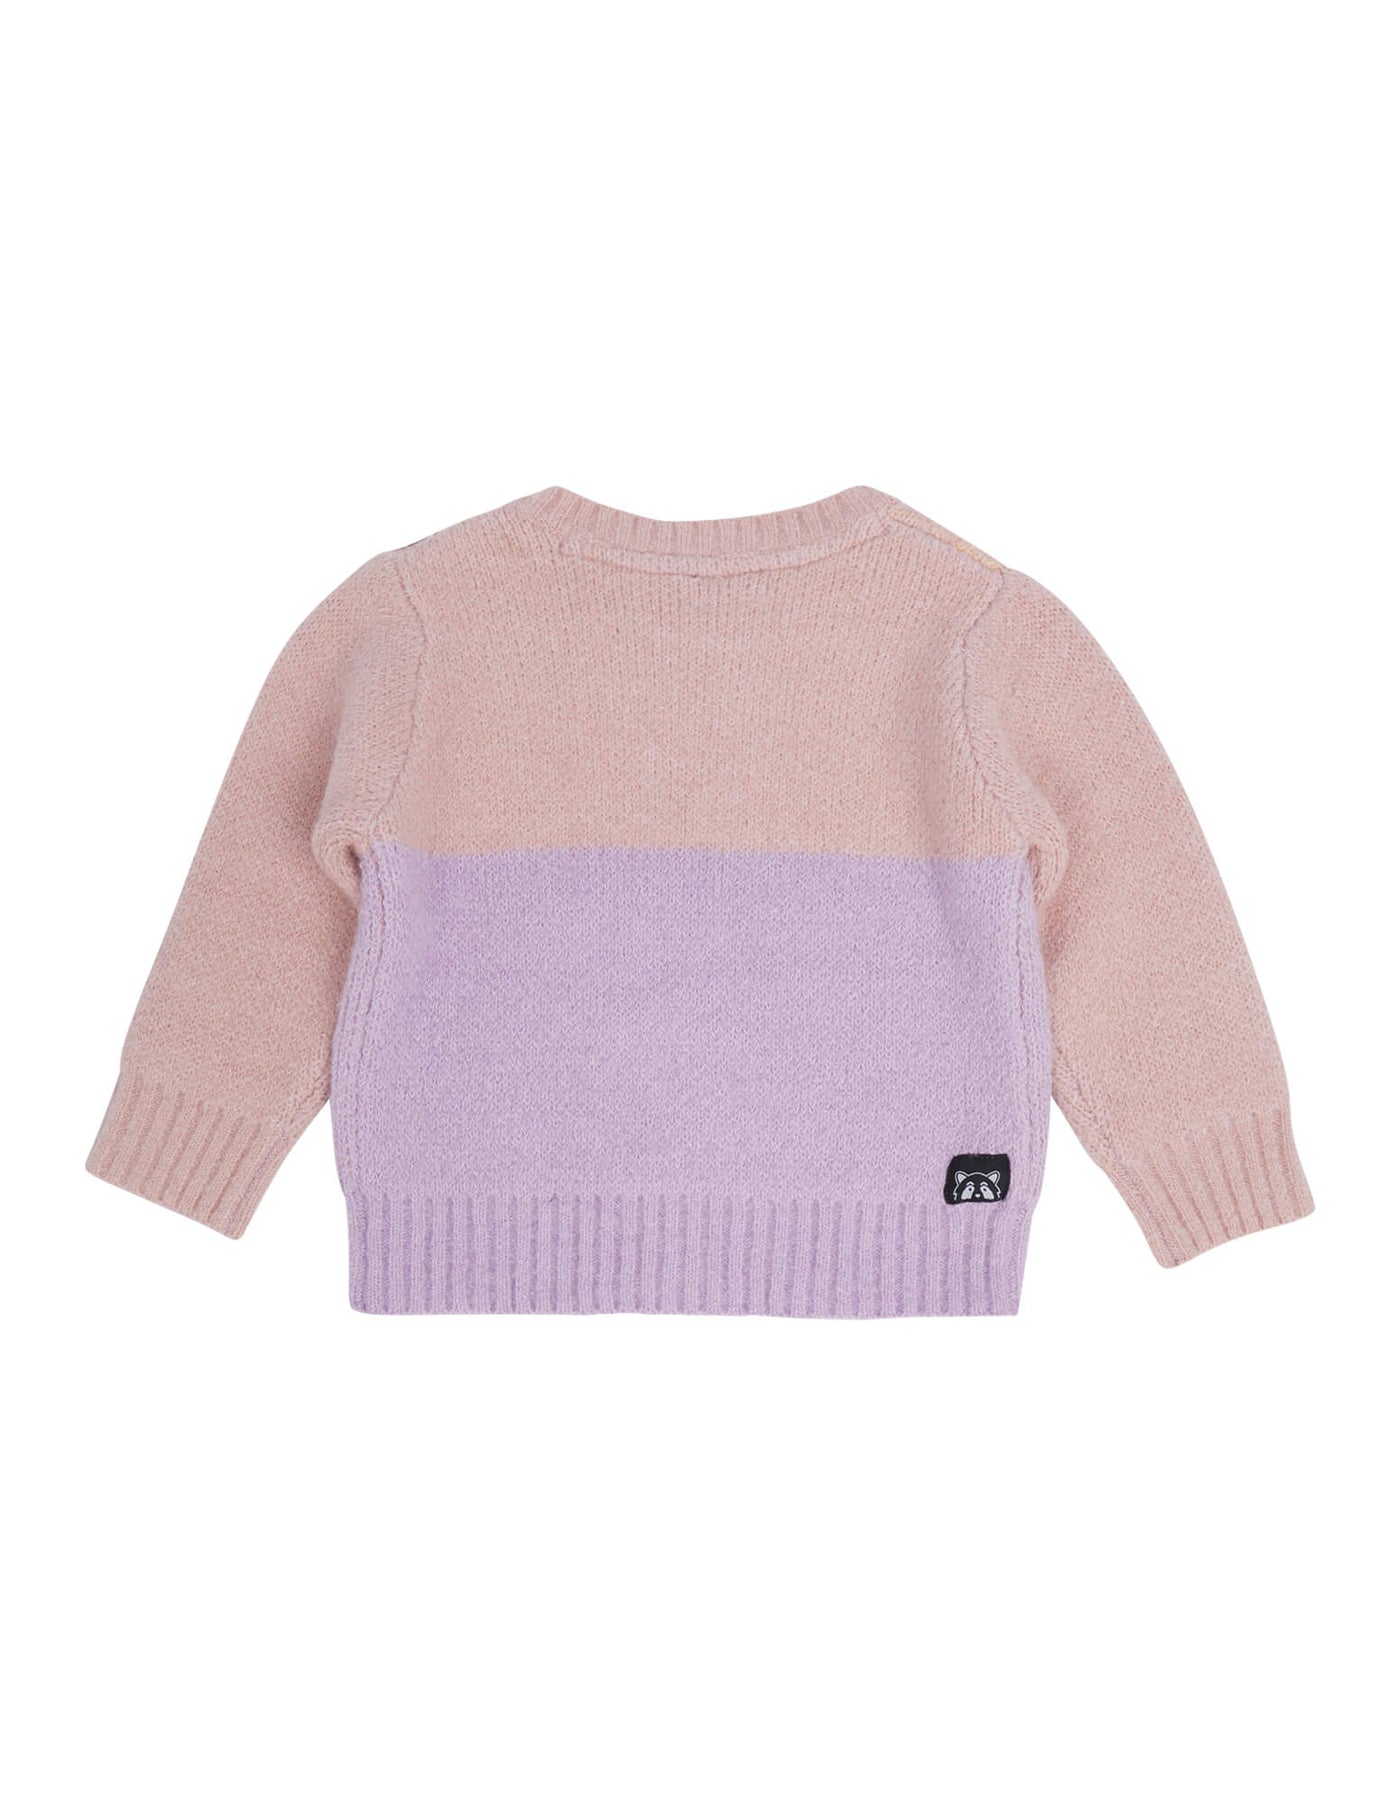 Yield Knit - Pink